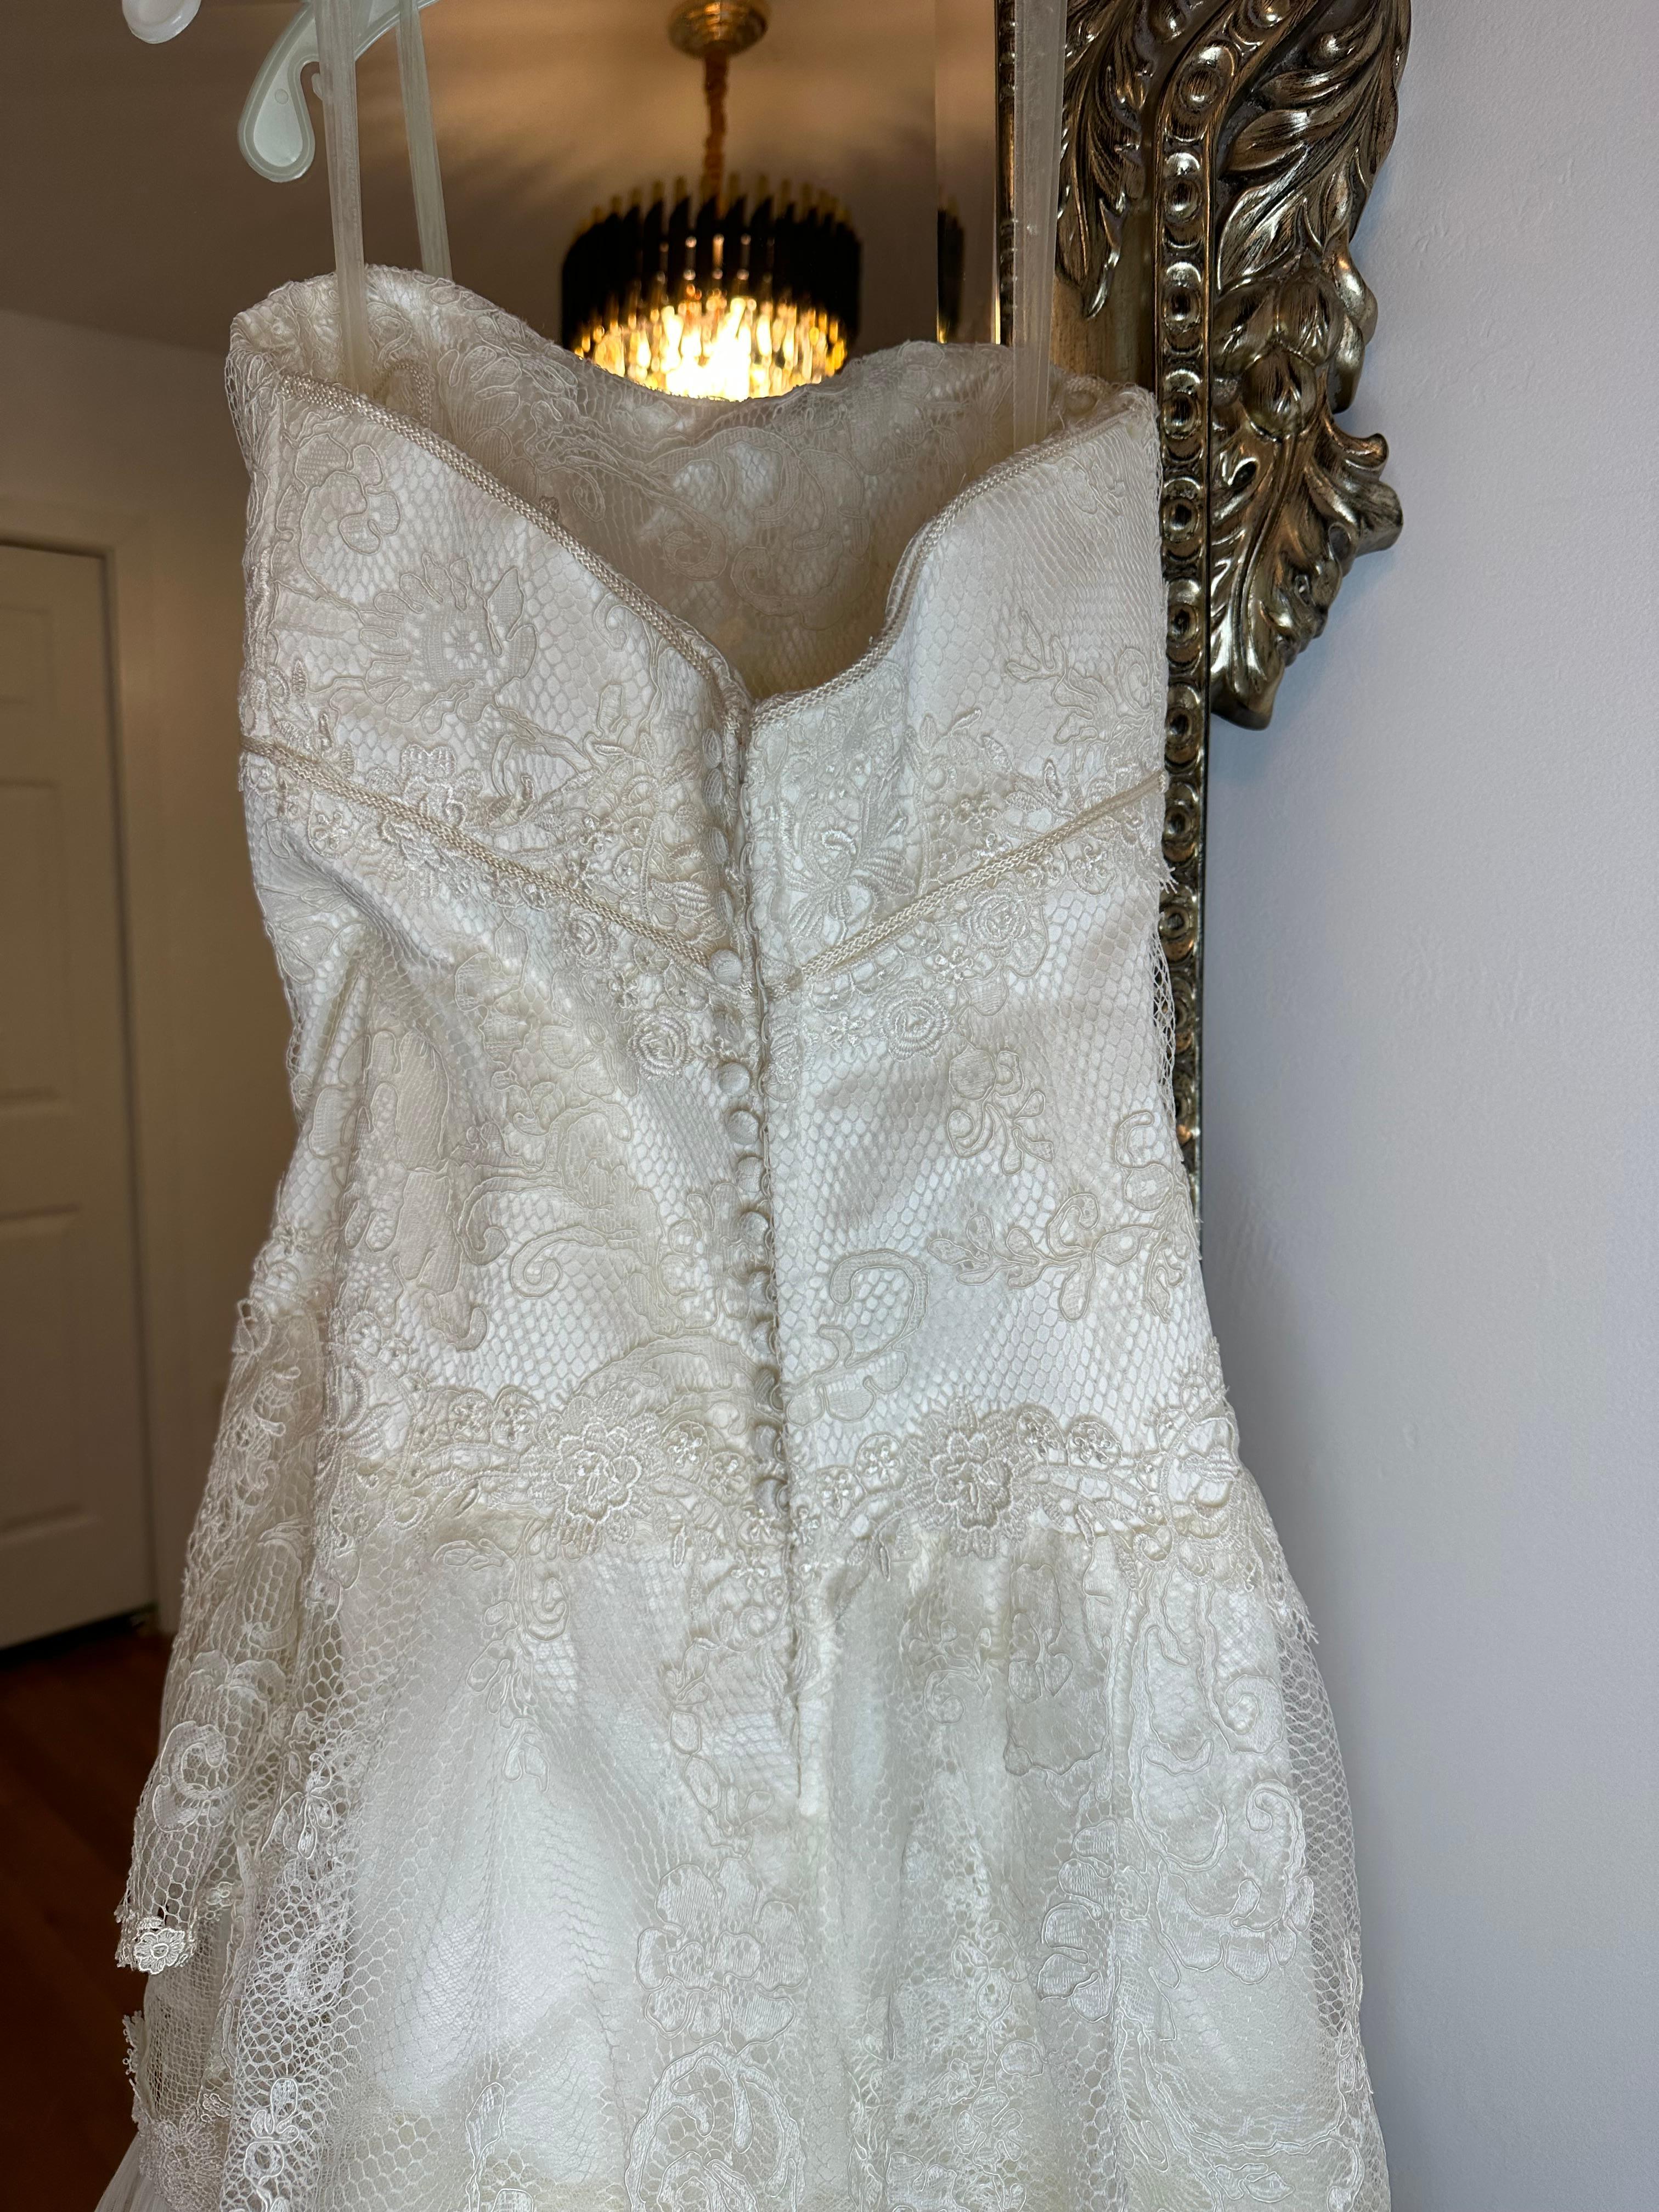 dolce and gabbana wedding dress